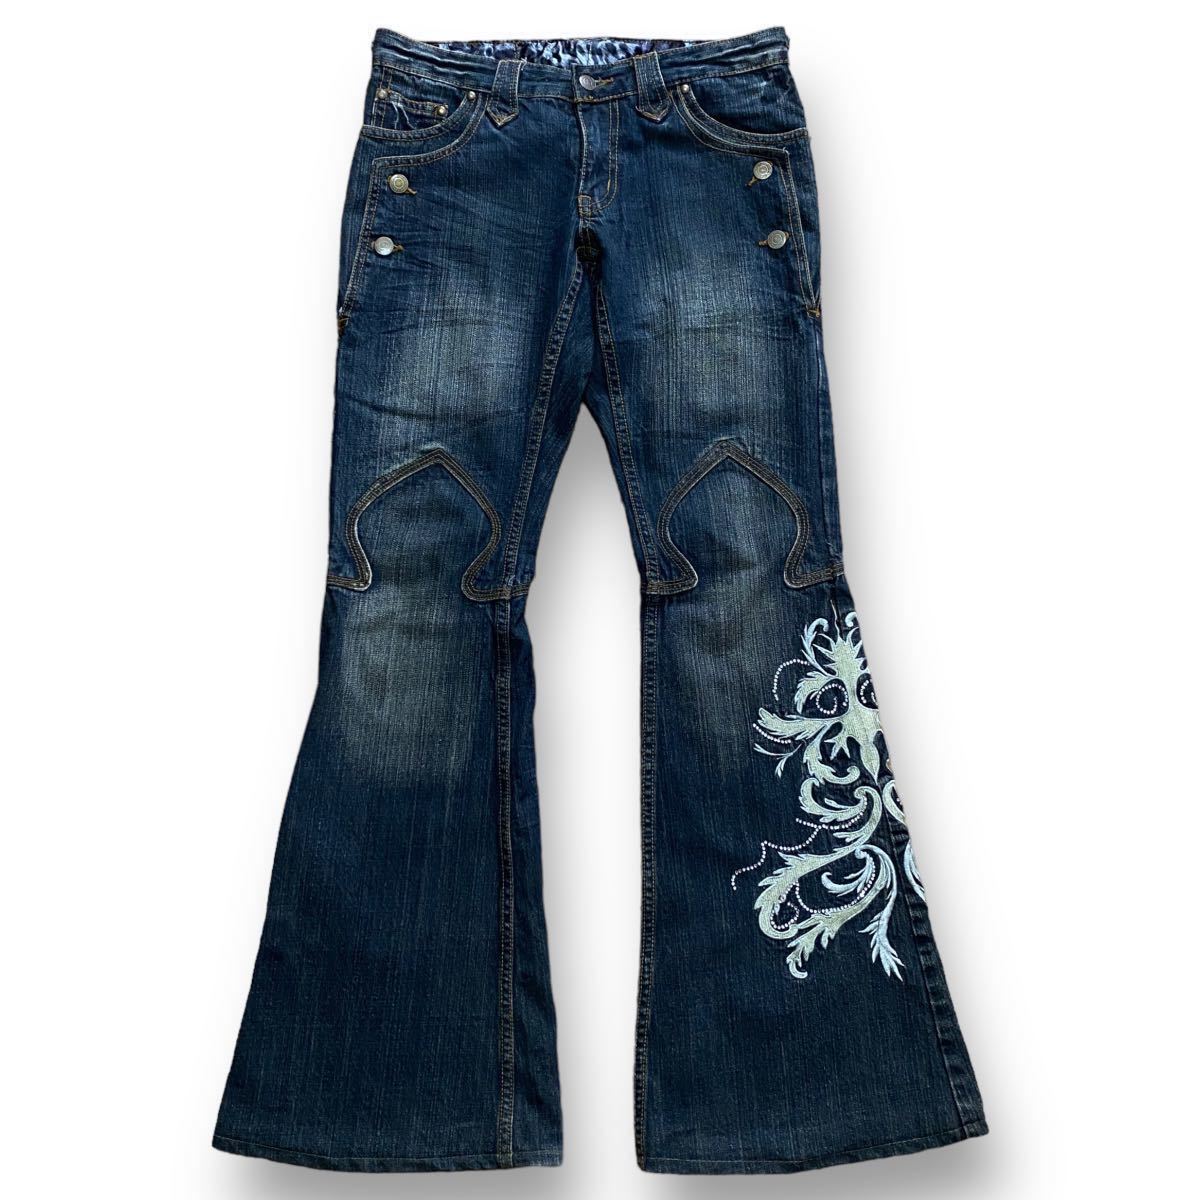 00s Tornado Mart embroidery flared jeans トルネードマート 刺繍 デニム パンツ ifsixwasnine l.g.b KMRii 14th addiction share spirit_画像1